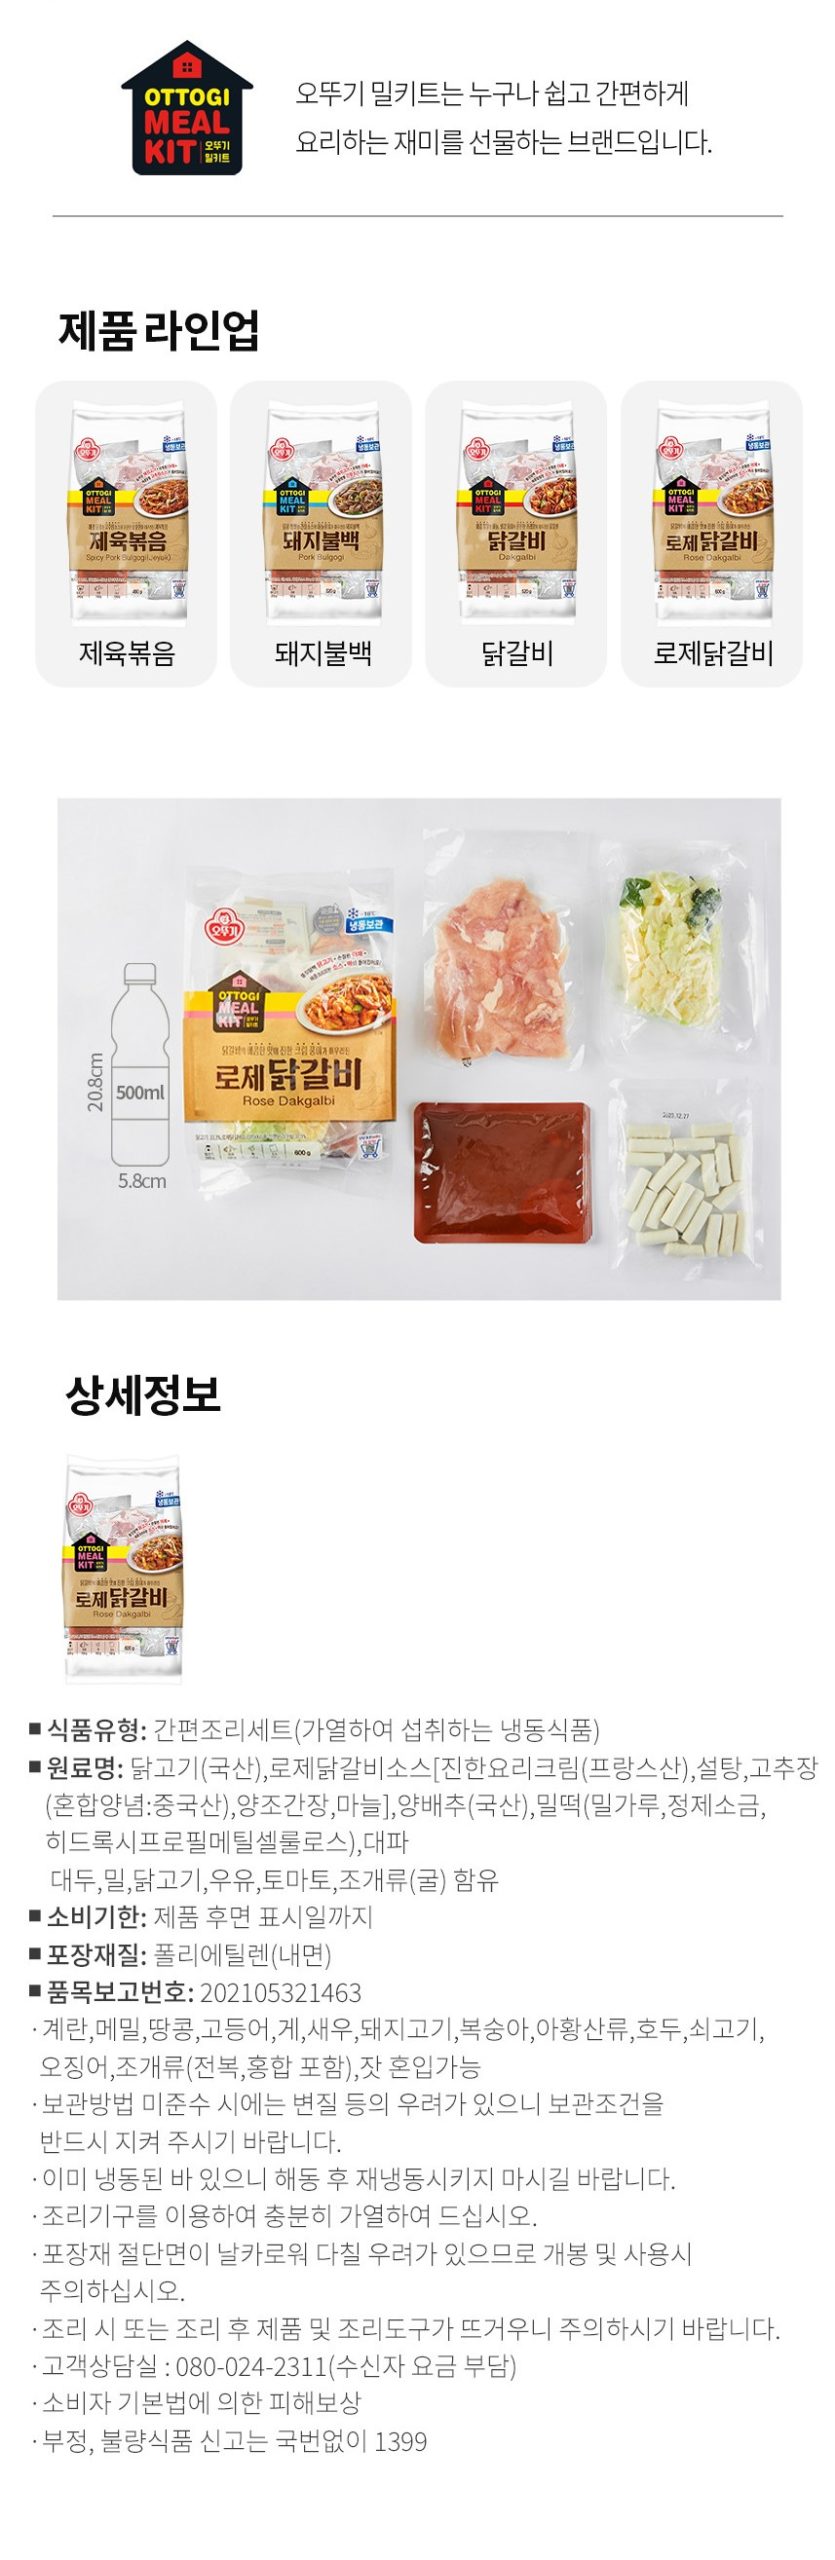 韓國食品-[Ottogi] Spicy Sauce Chicken (Rose) 600g